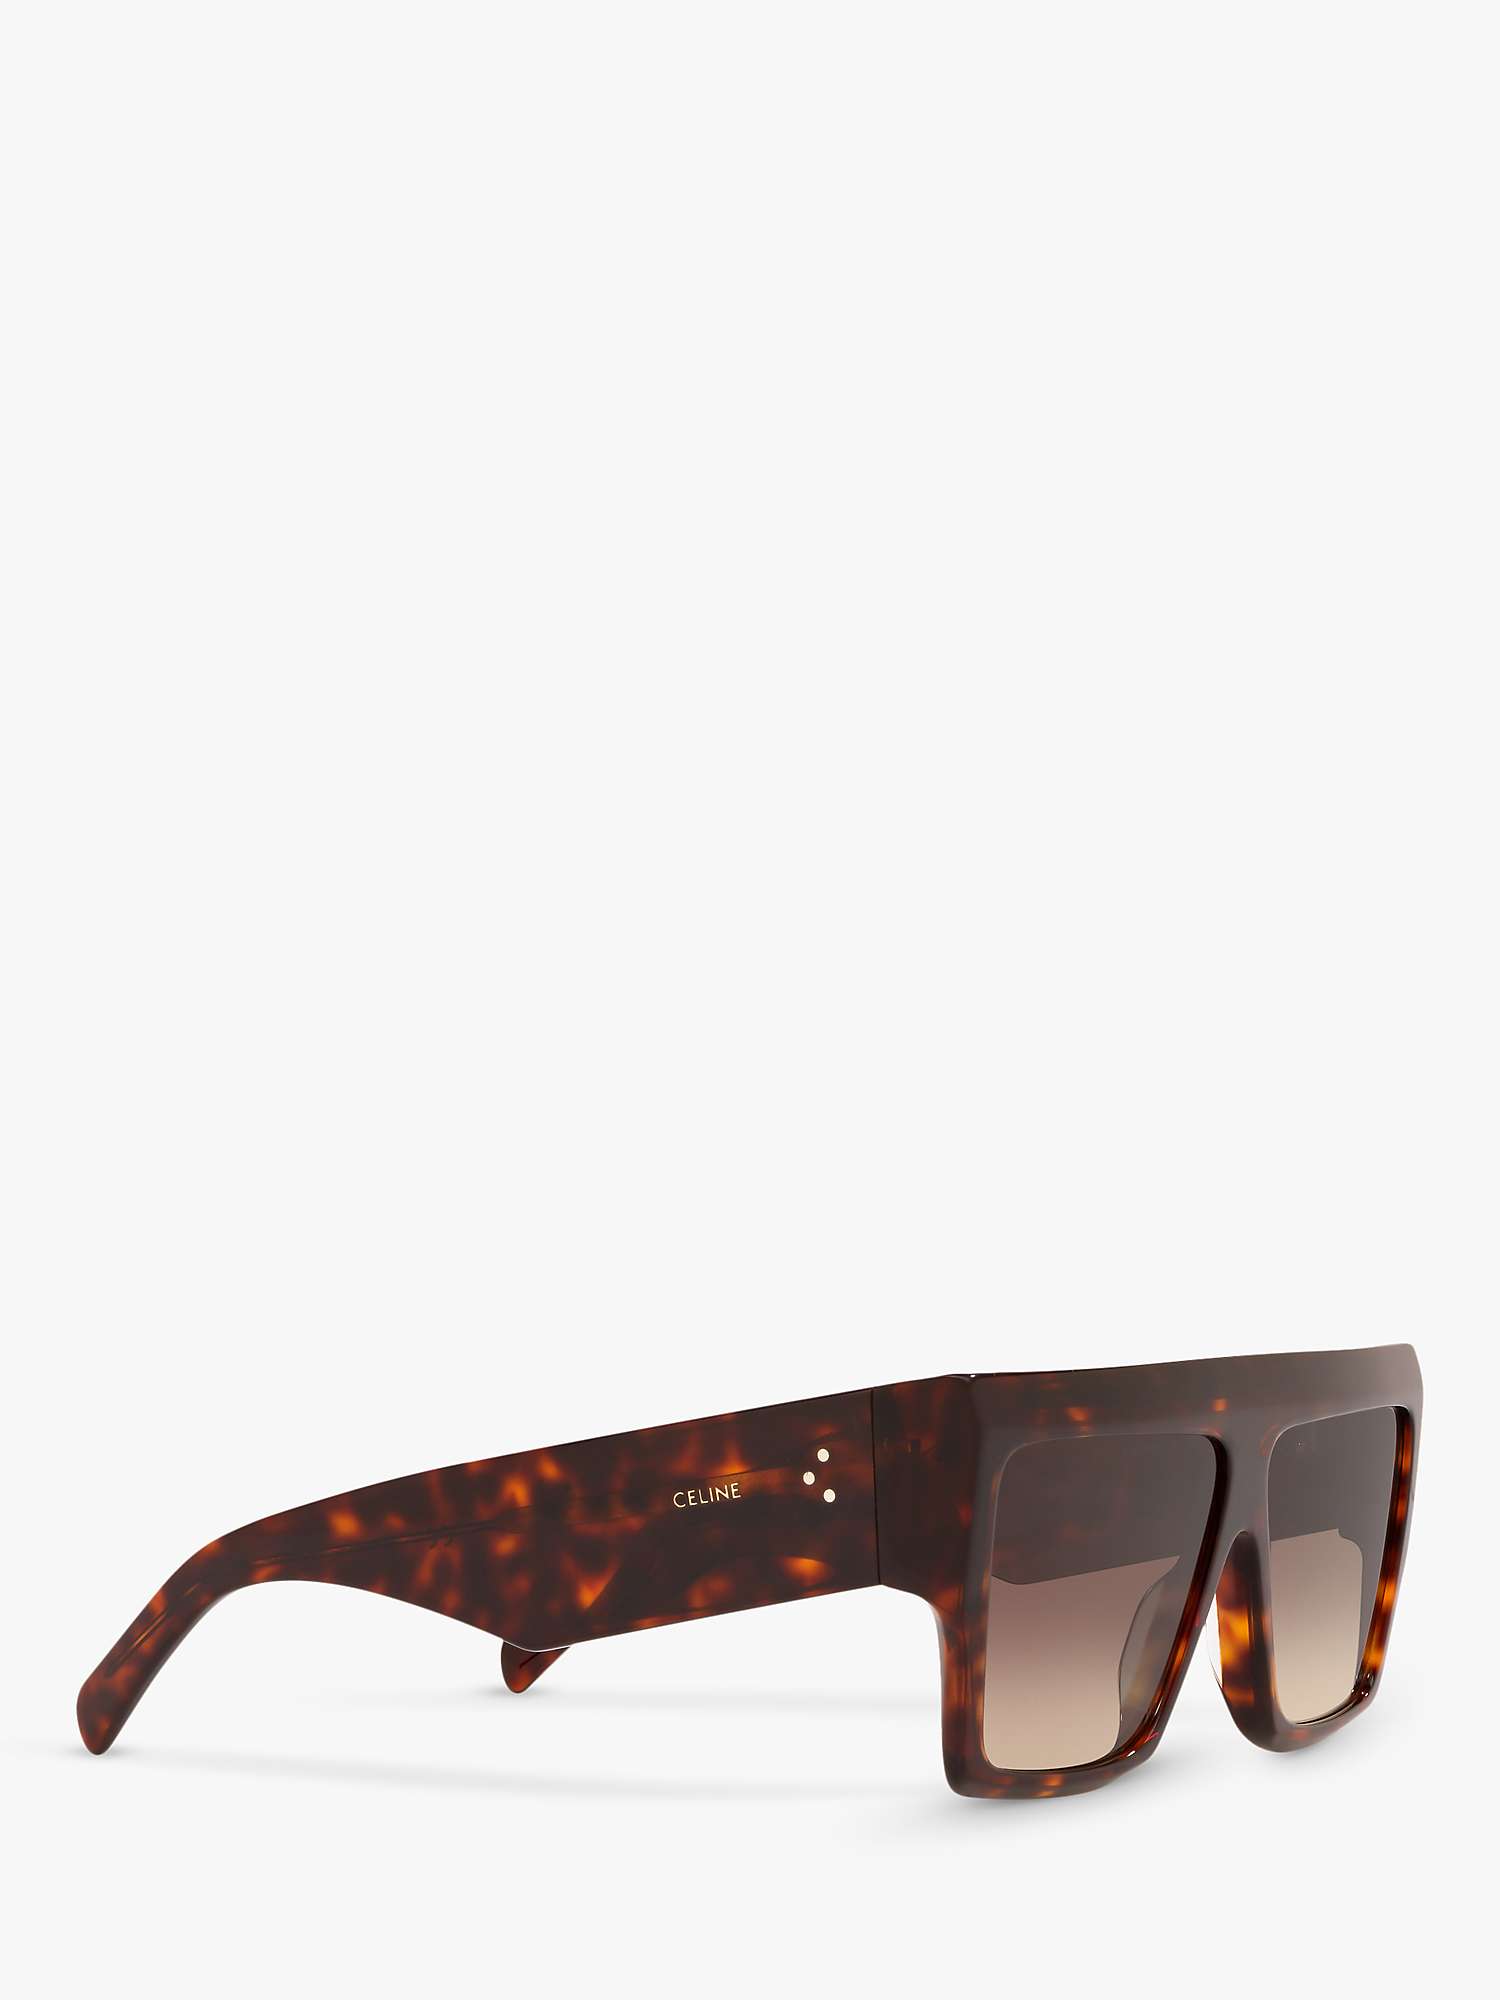 Buy Celine CL000240 Women's Square Sunglasses, Tortoise/Brown Gradient Online at johnlewis.com